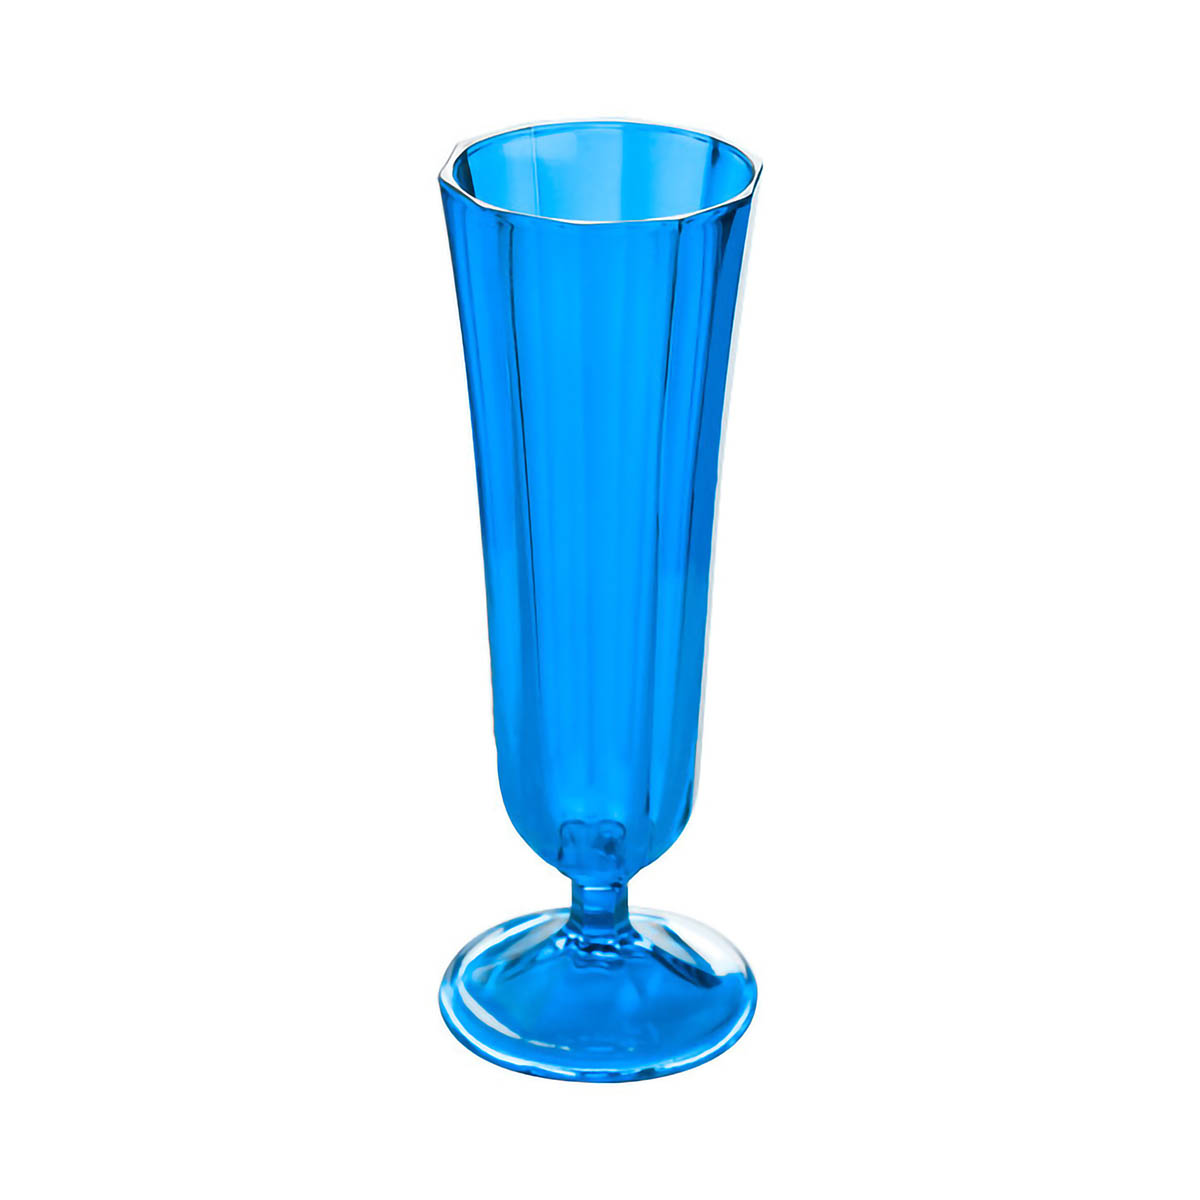 Porland Mavi Flüt Şampanya Bardağı 130 cc 04FIA001750 Bardaklar porland karma renkli cam bardak